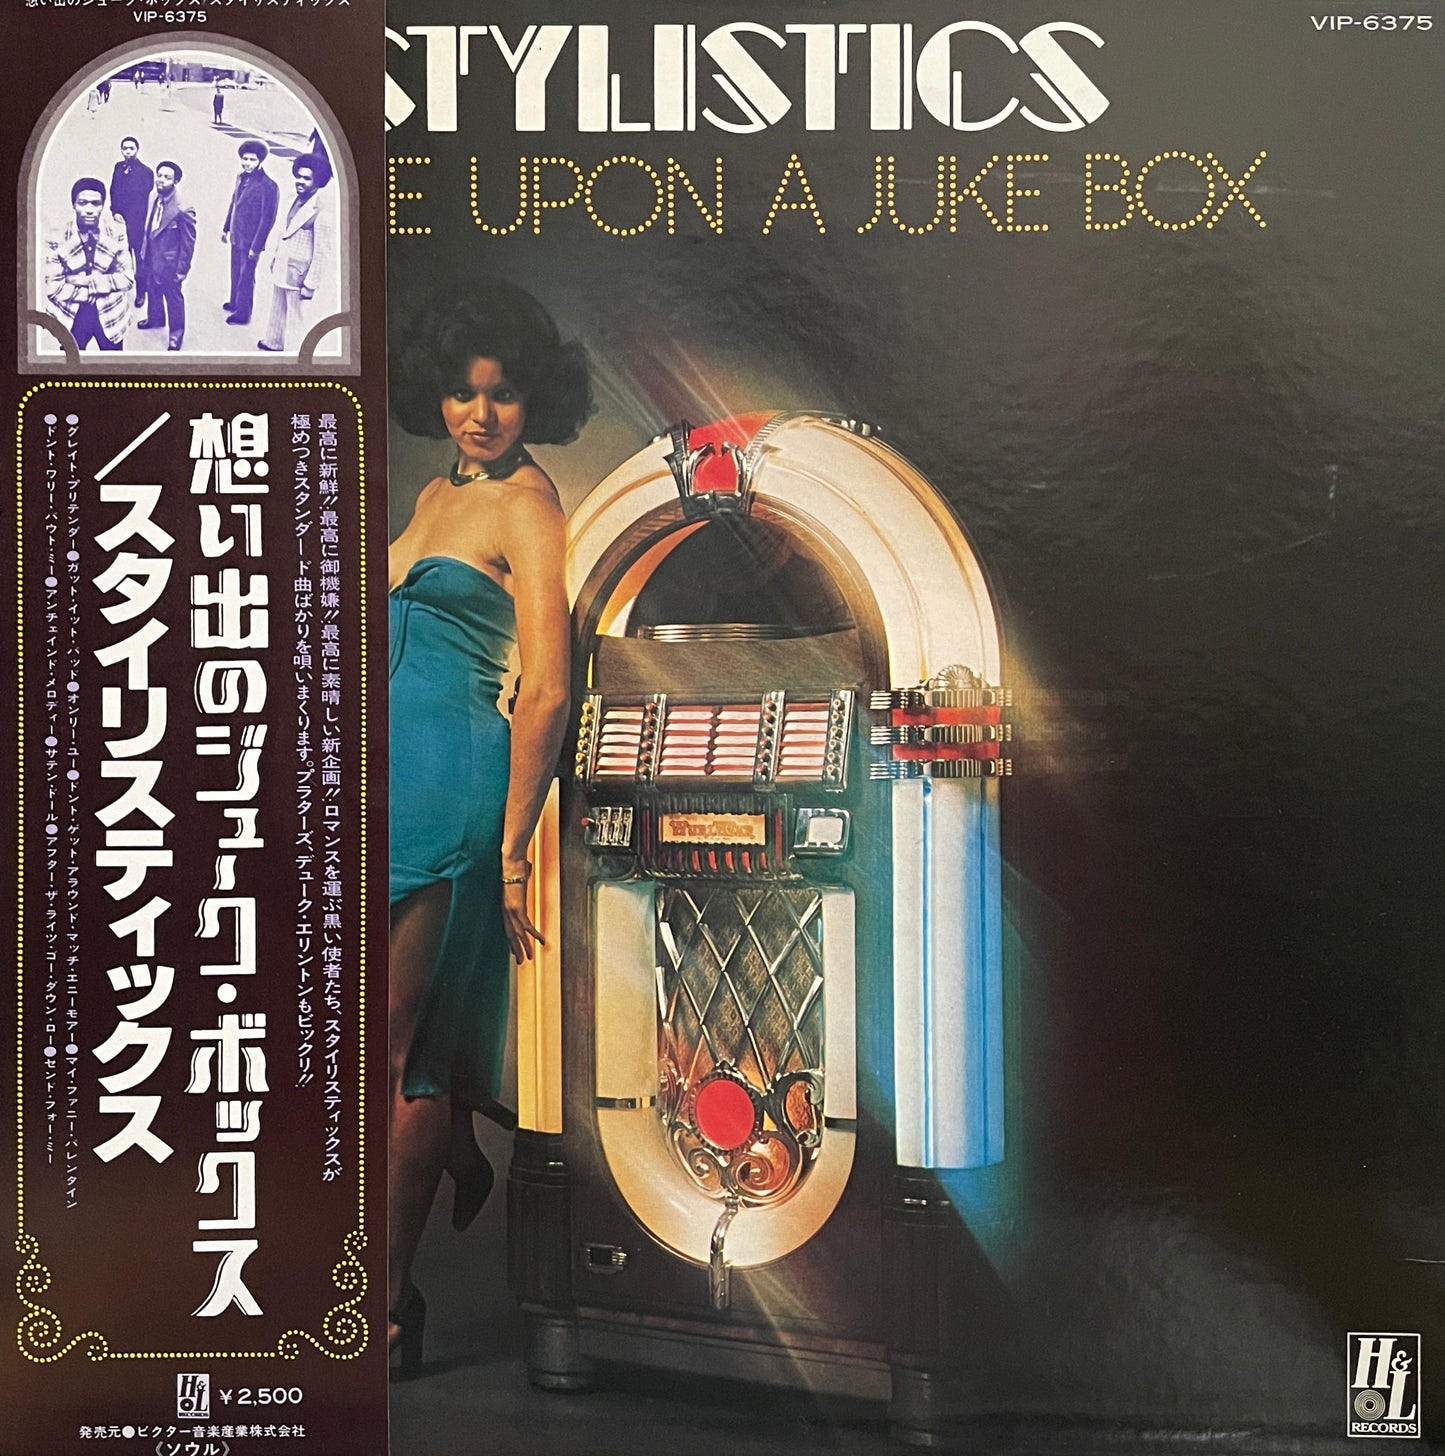 The Stylistics "Once Upon A Juke Box" (1976)